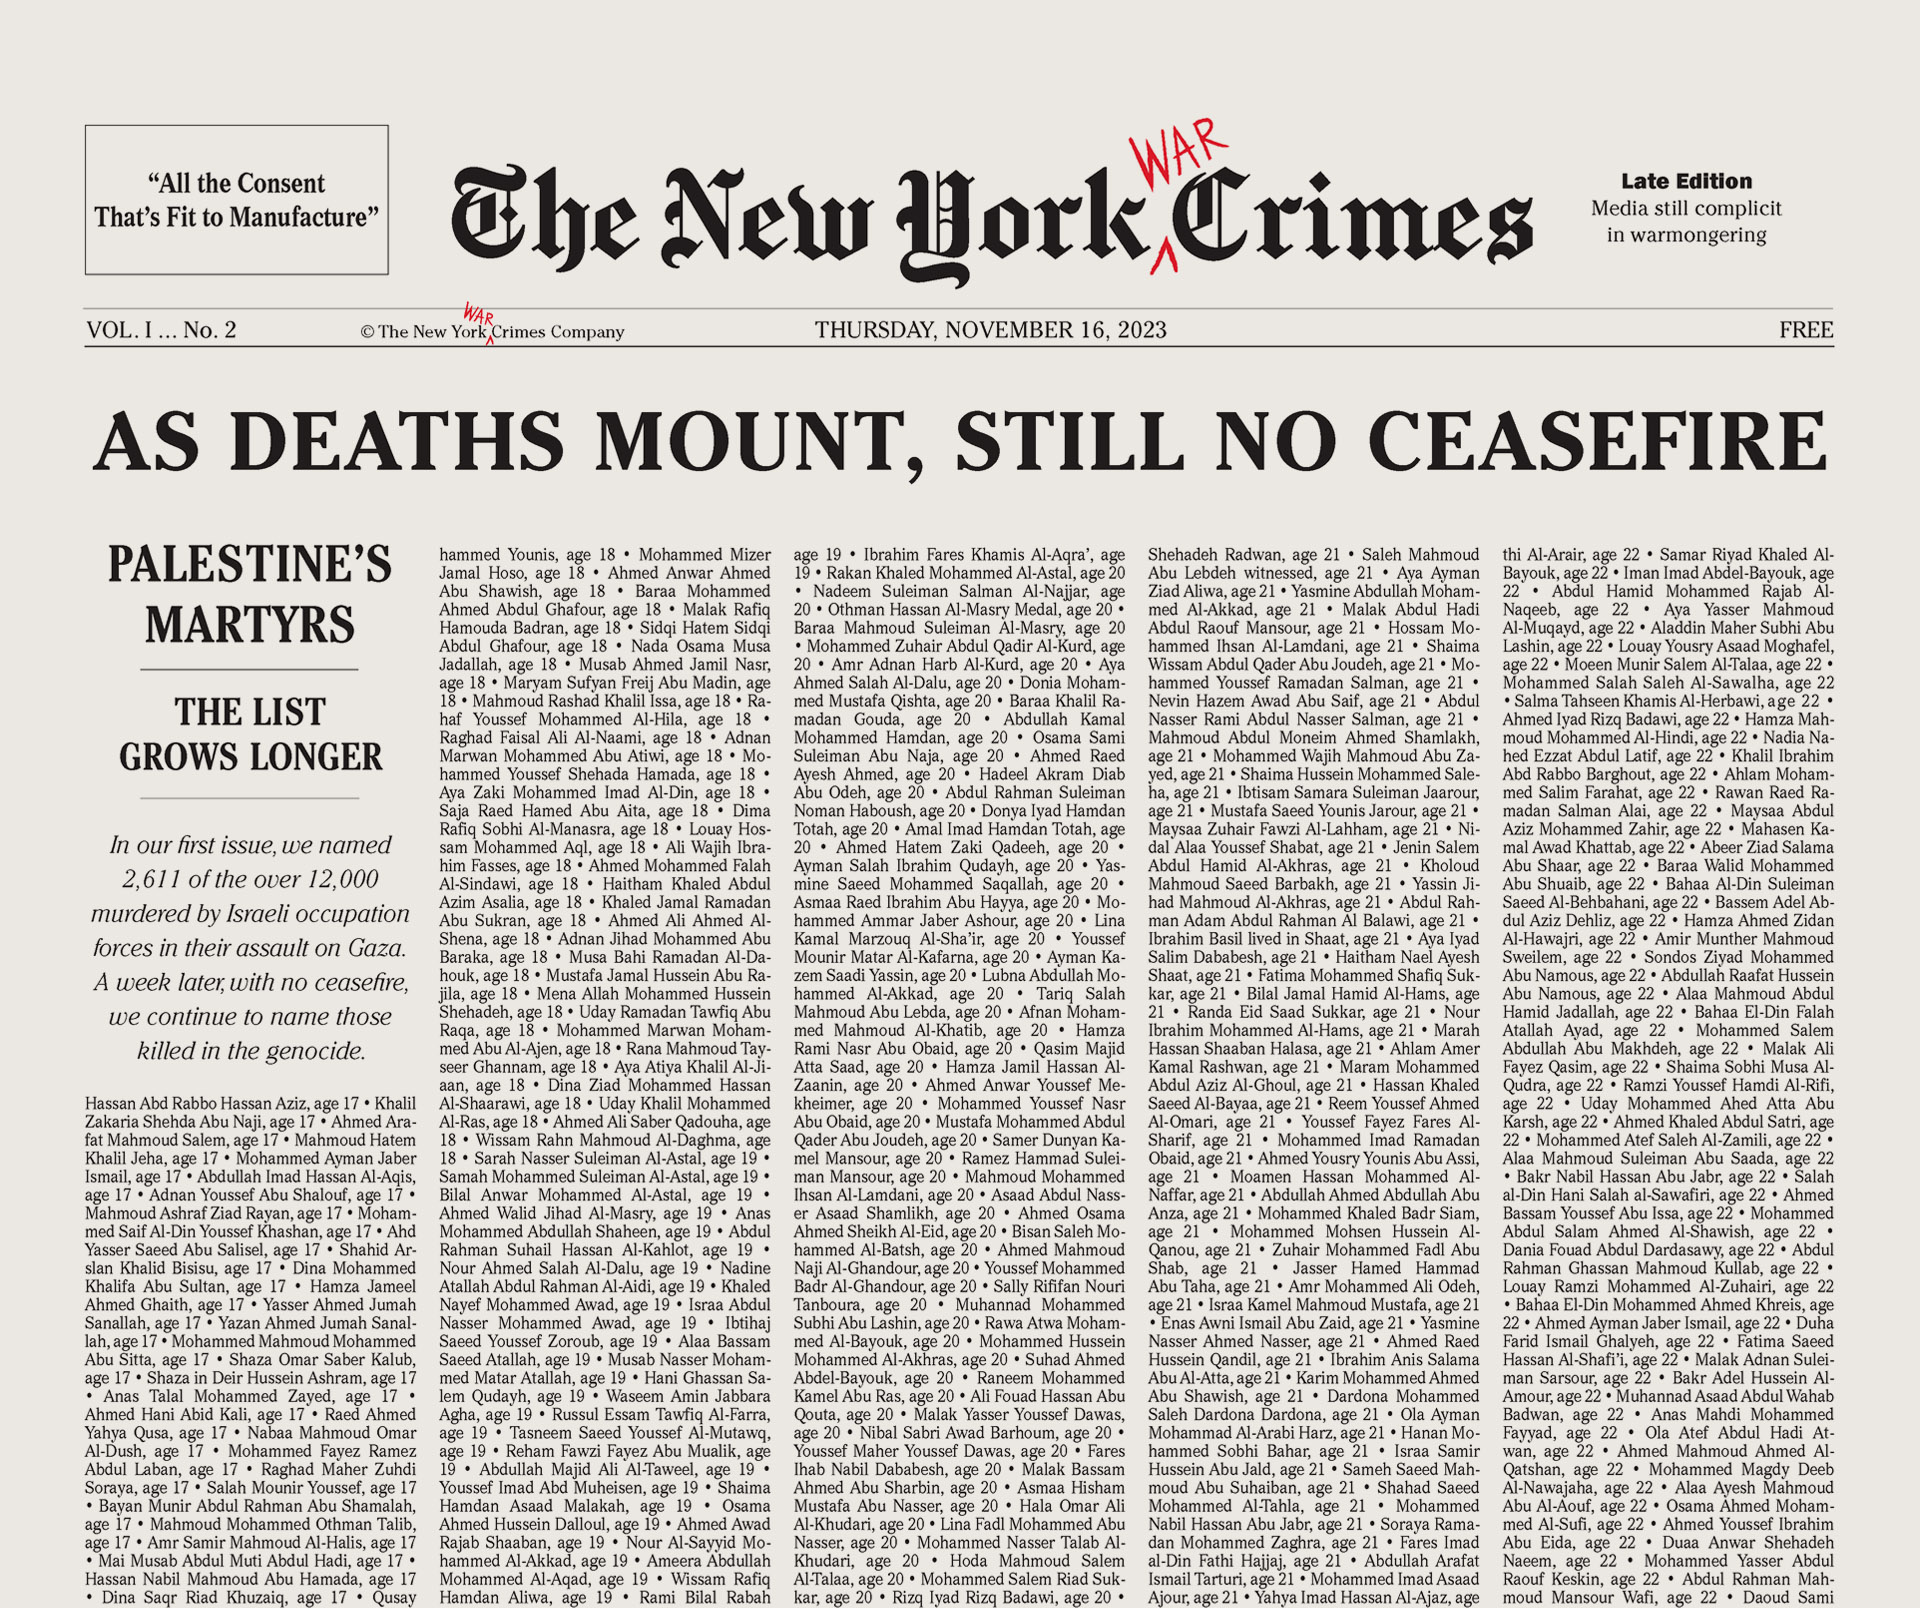 https://newyorkwarcrimes.com/media/pages/print-issue-vol-i-no-2-as-death-mounts-still-no-ceasefire/4ede5e506e-1708981499/ny-crimes-02-cover.jpg